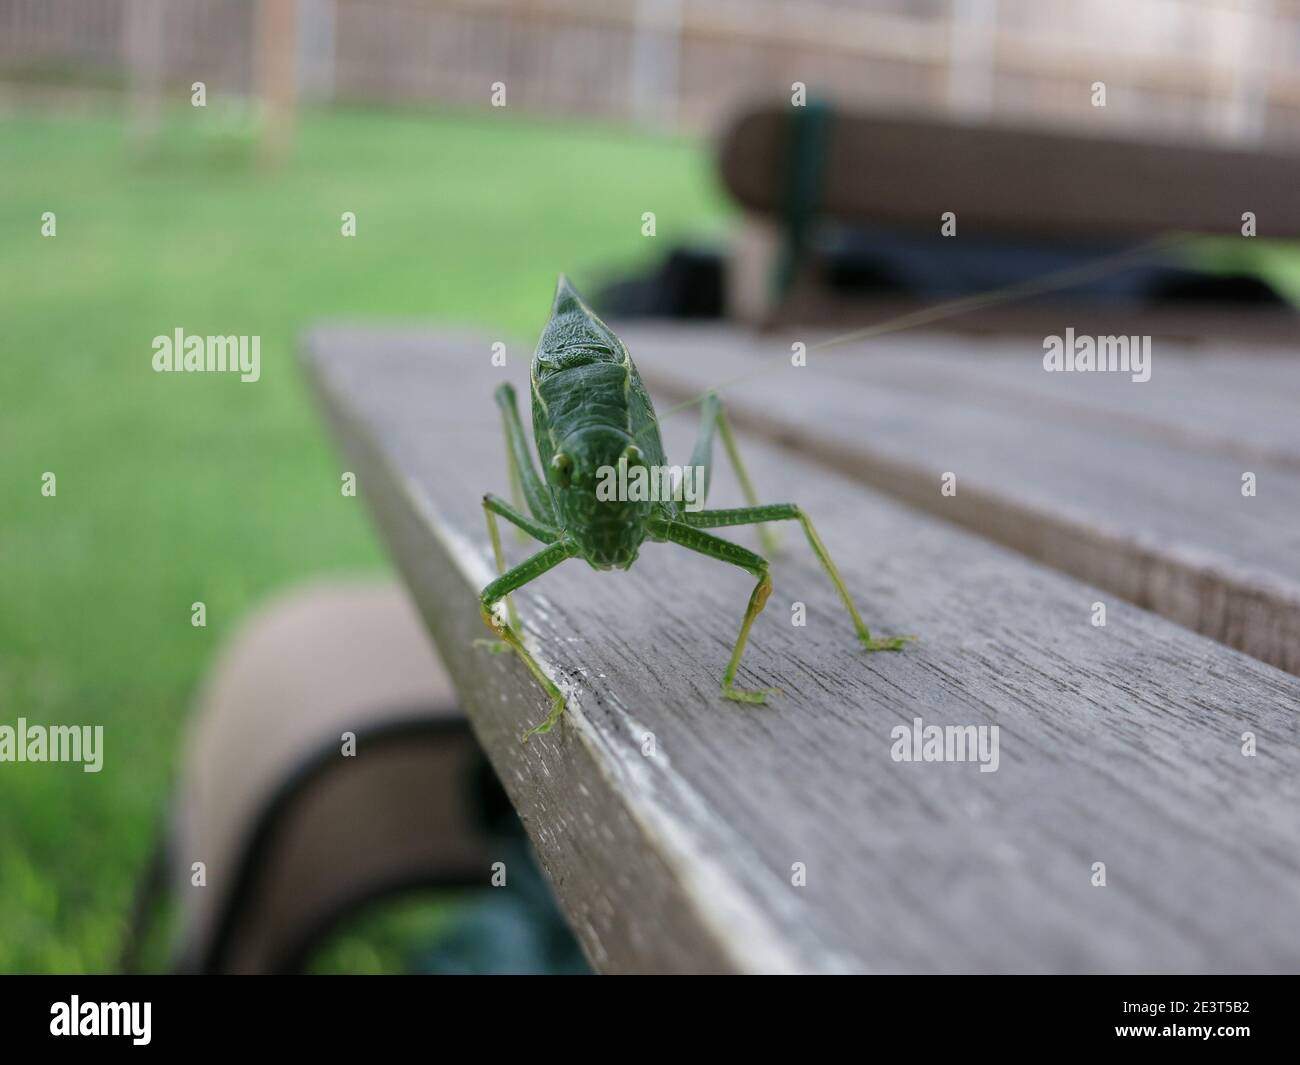 front tal close-up of a leaf-shaped Katydid cricket (Tettigoniidae) sitting on garden furniture Stock Photo